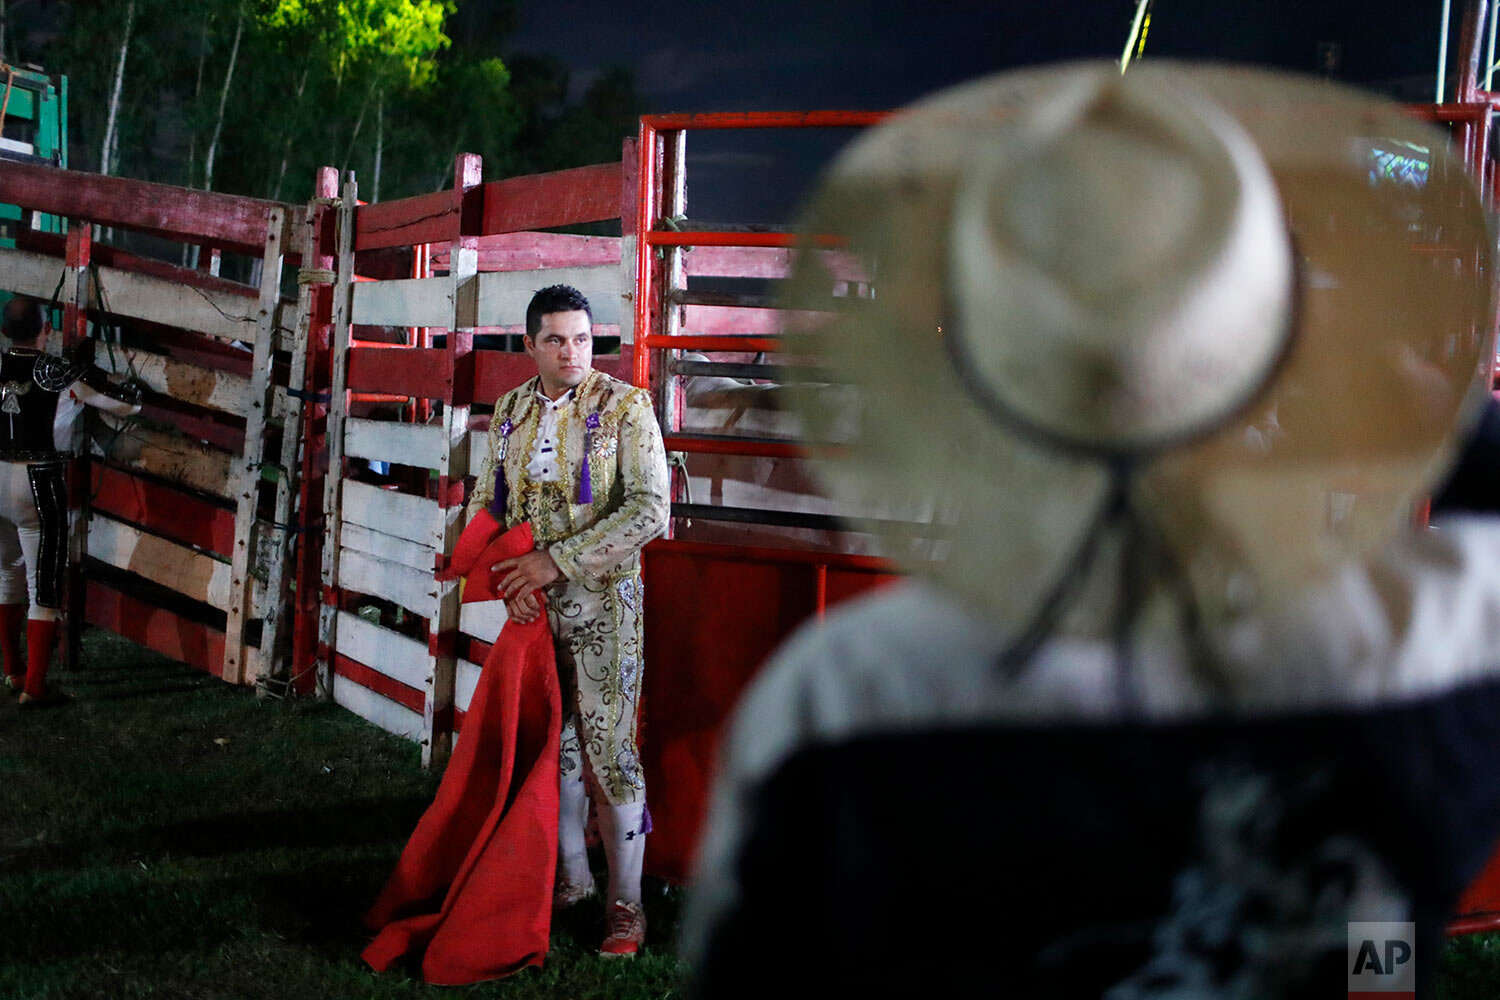  Antonio Gomez waits for the bull to enters the enclosure during a bullfight festival in Santa Elena, Paraguay, Saturday, Feb. 8, 2020. (AP Photo/Jorge Saenz) 